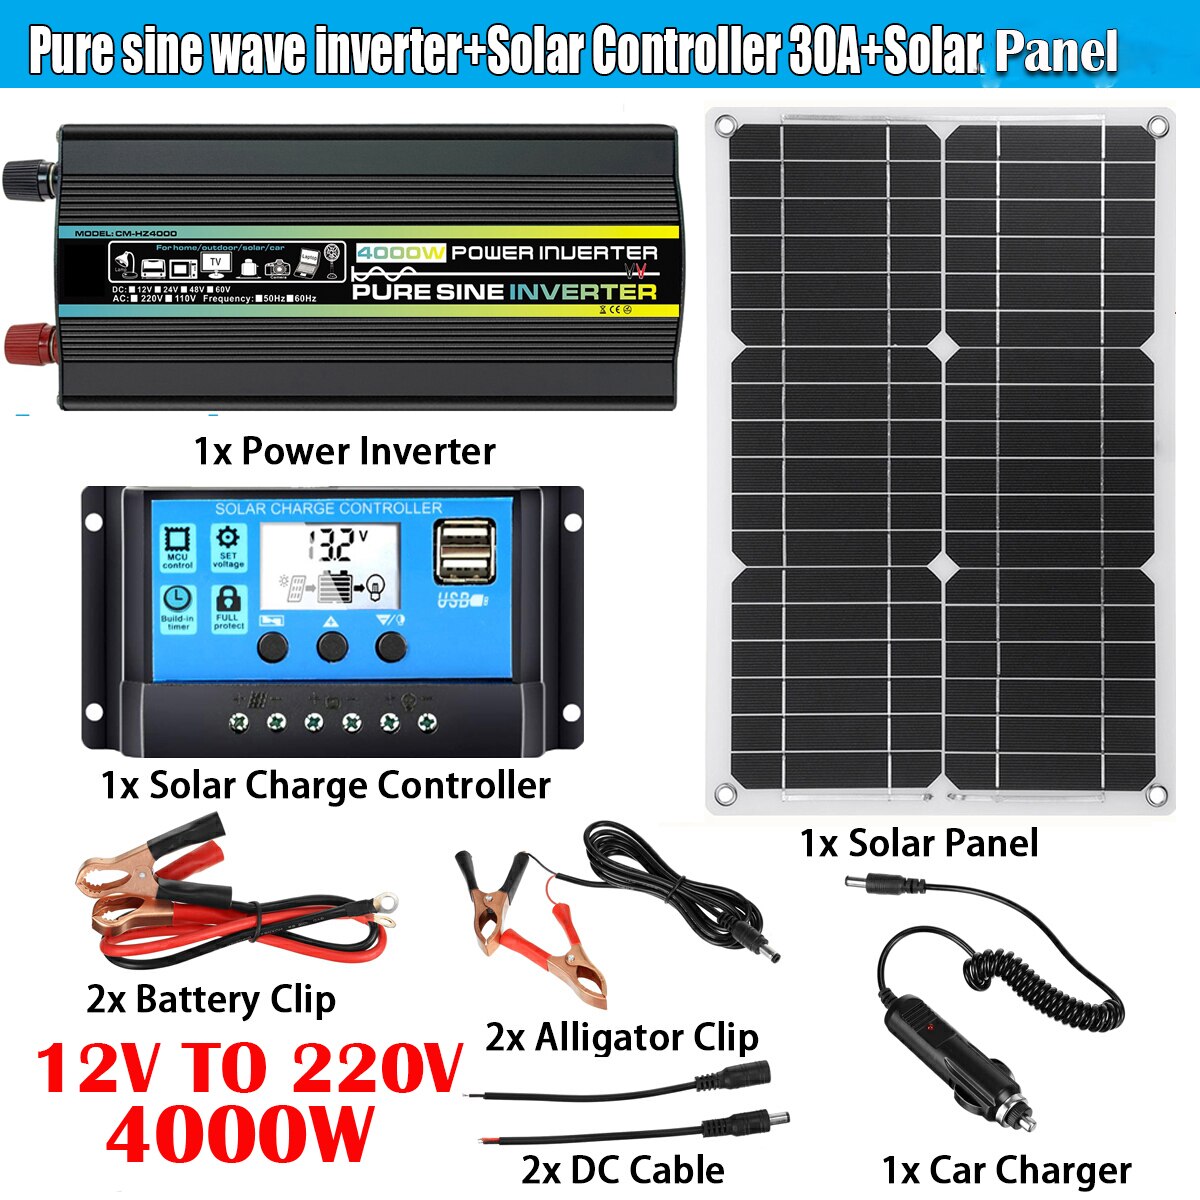 Ix Power Inverter SOLAR CHARGE CONTROL